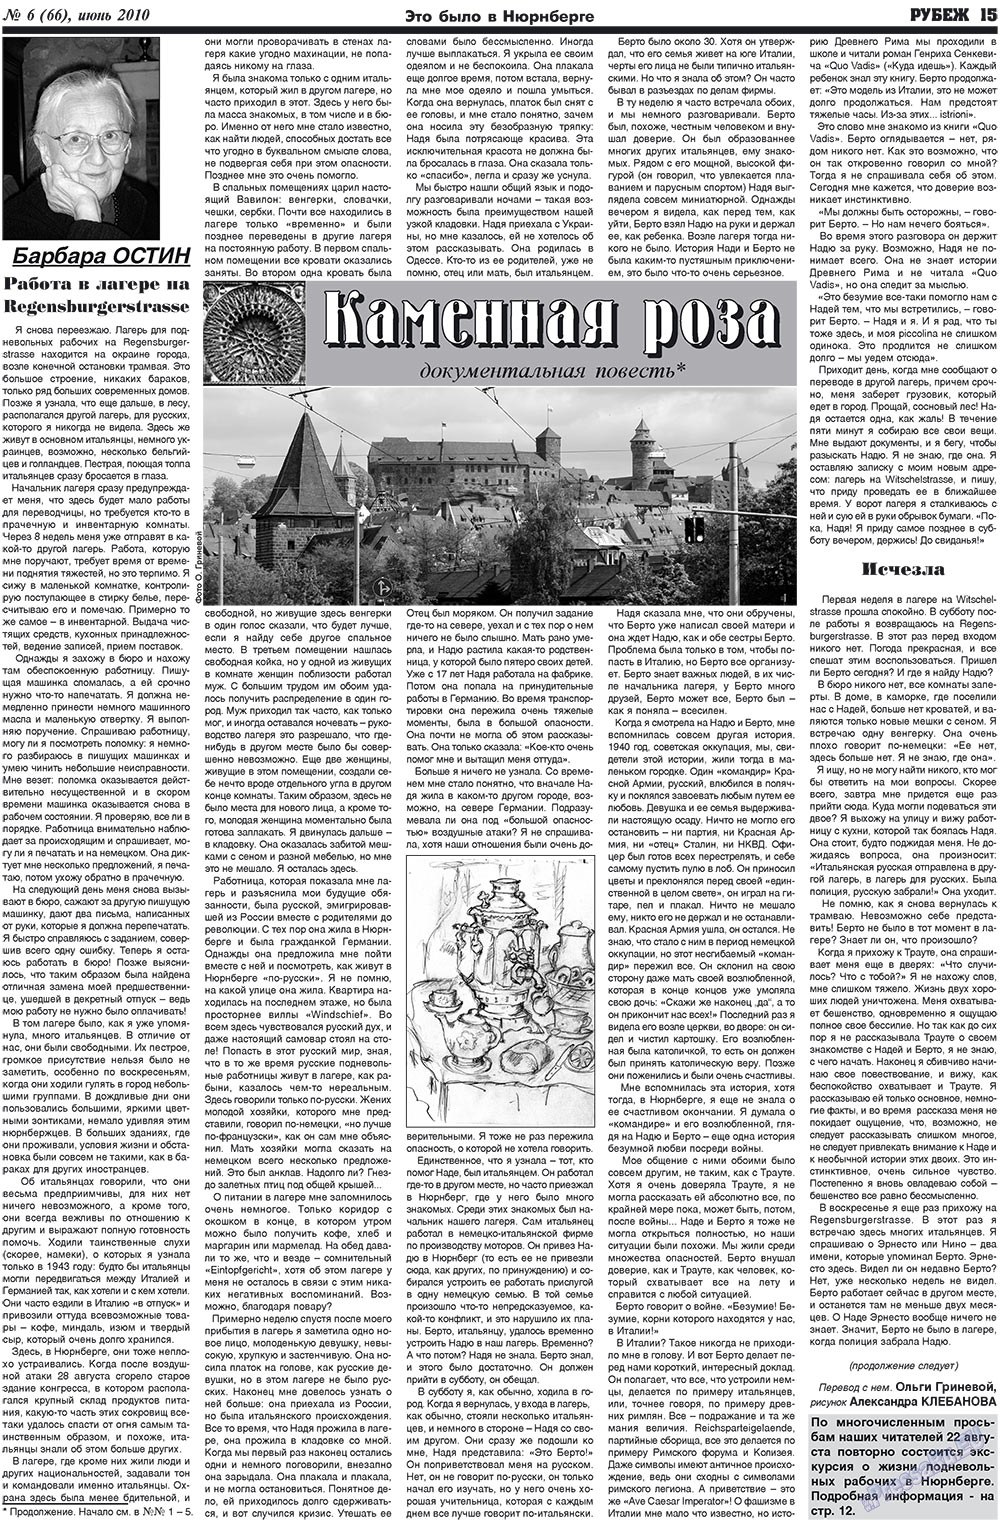 Рубеж, газета. 2010 №6 стр.15